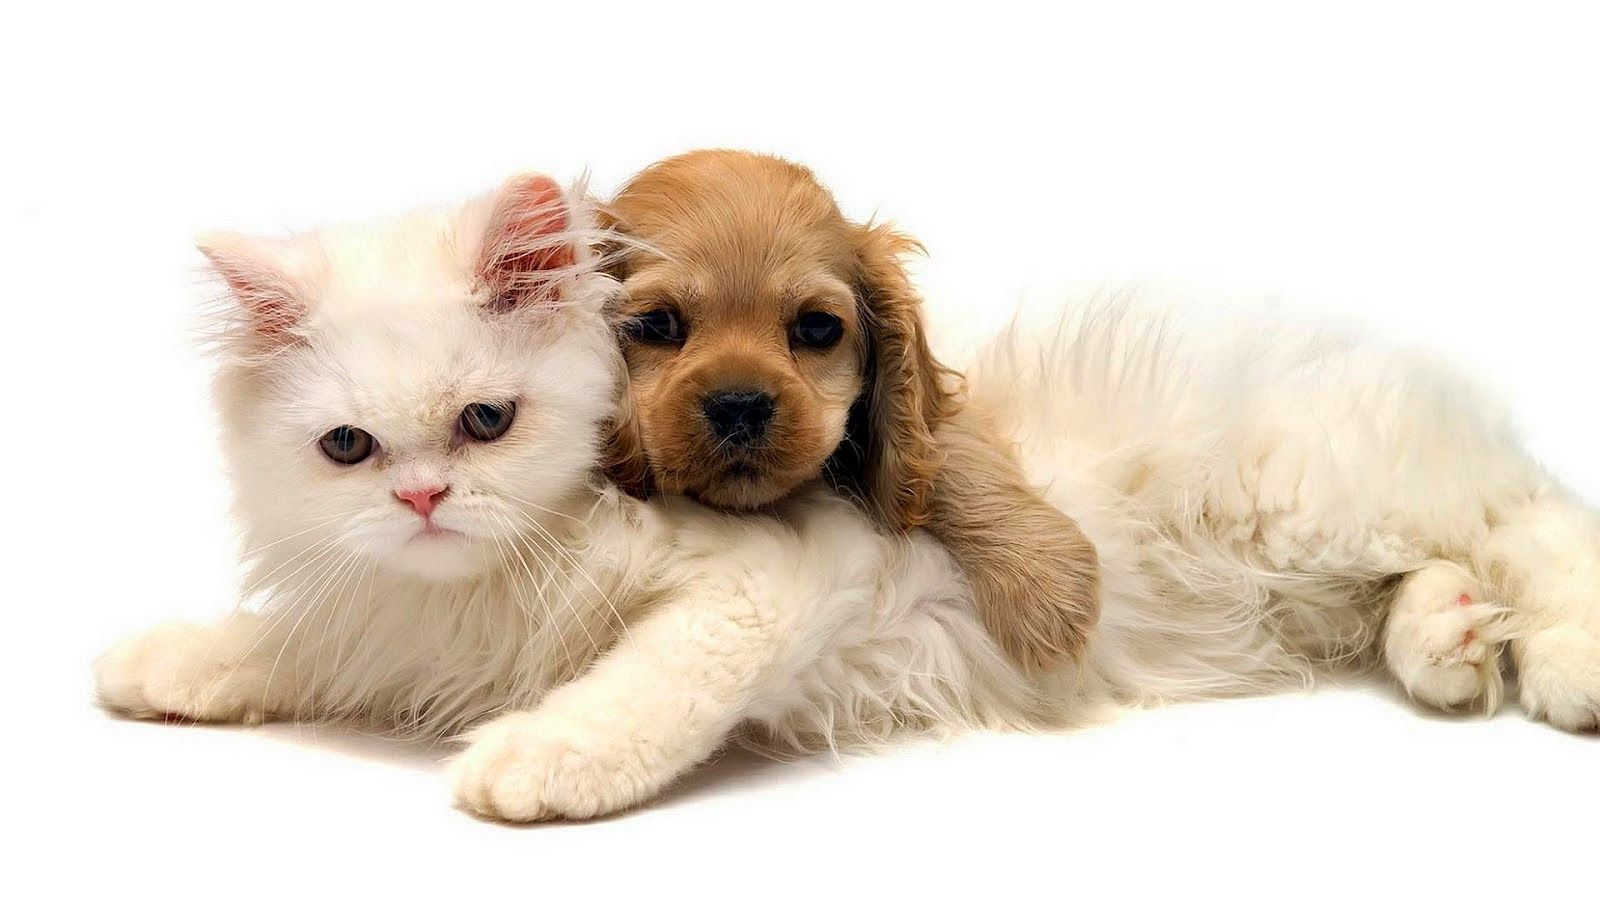 Cat & Dog wallpaper, Animal, HQ Cat & Dog pictureK Wallpaper 2019